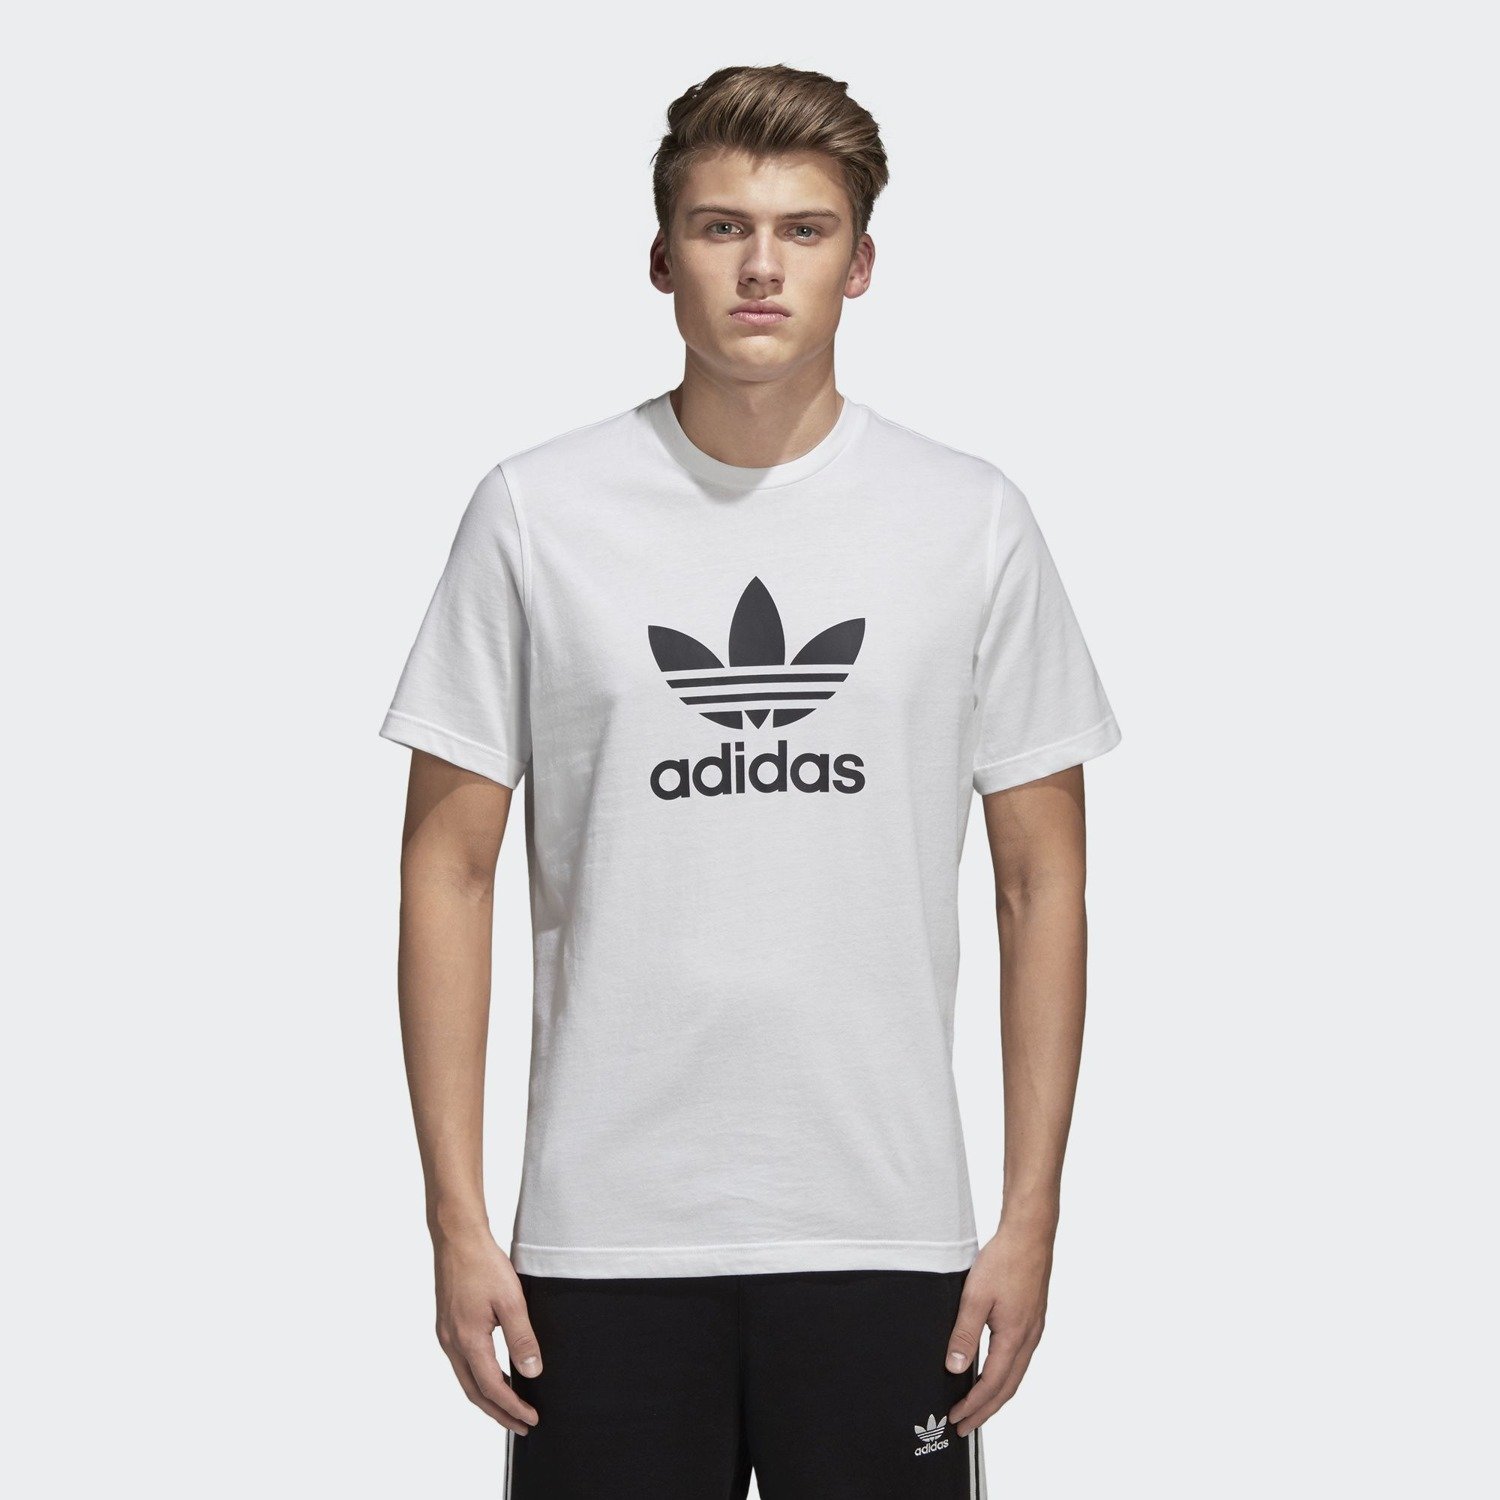 Adidas Originals Mens Trefoil 3 Stripe Crew Short Sleeve T Shirt S M L ...